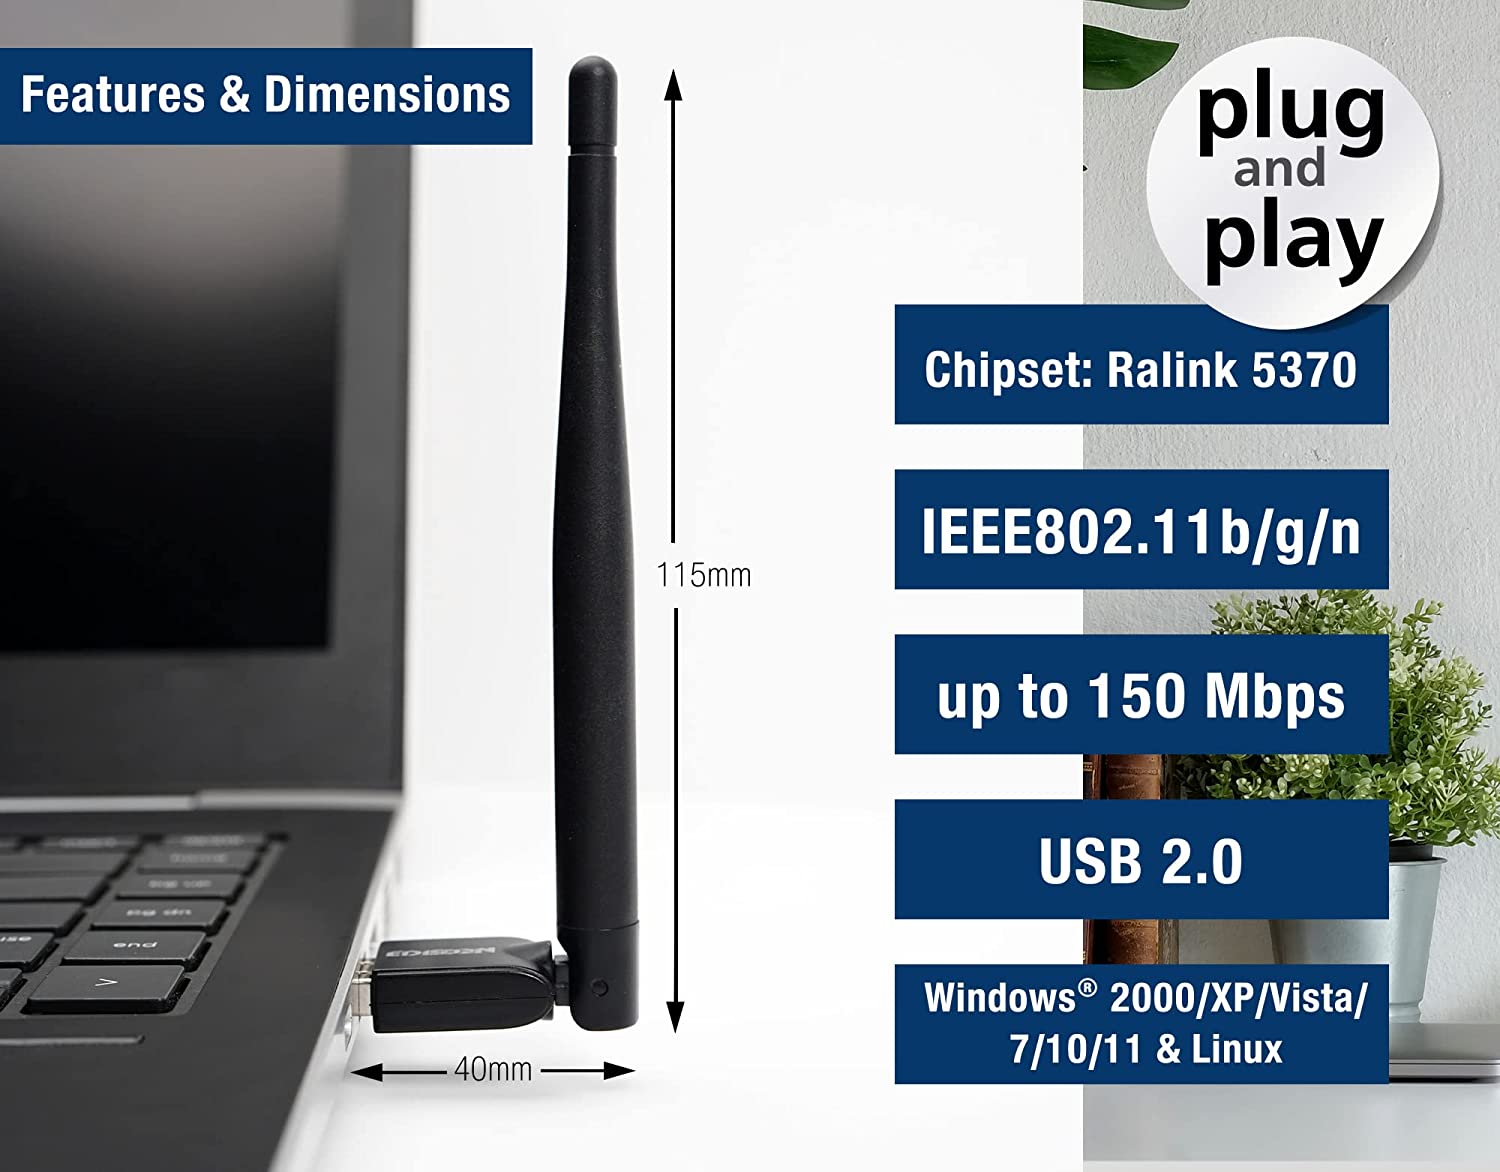 EDISION USB WLAN ANTENNE WiFi EDI-Mega 150 Mbps, Ralink 5370, ORIGINAL, UNIVERSAL, Picco T265, Picco T265+, Nano T265+, Picco T265 pro, PING T2/C, Proton S2, Windows2000/XP/Vista/7/10/11